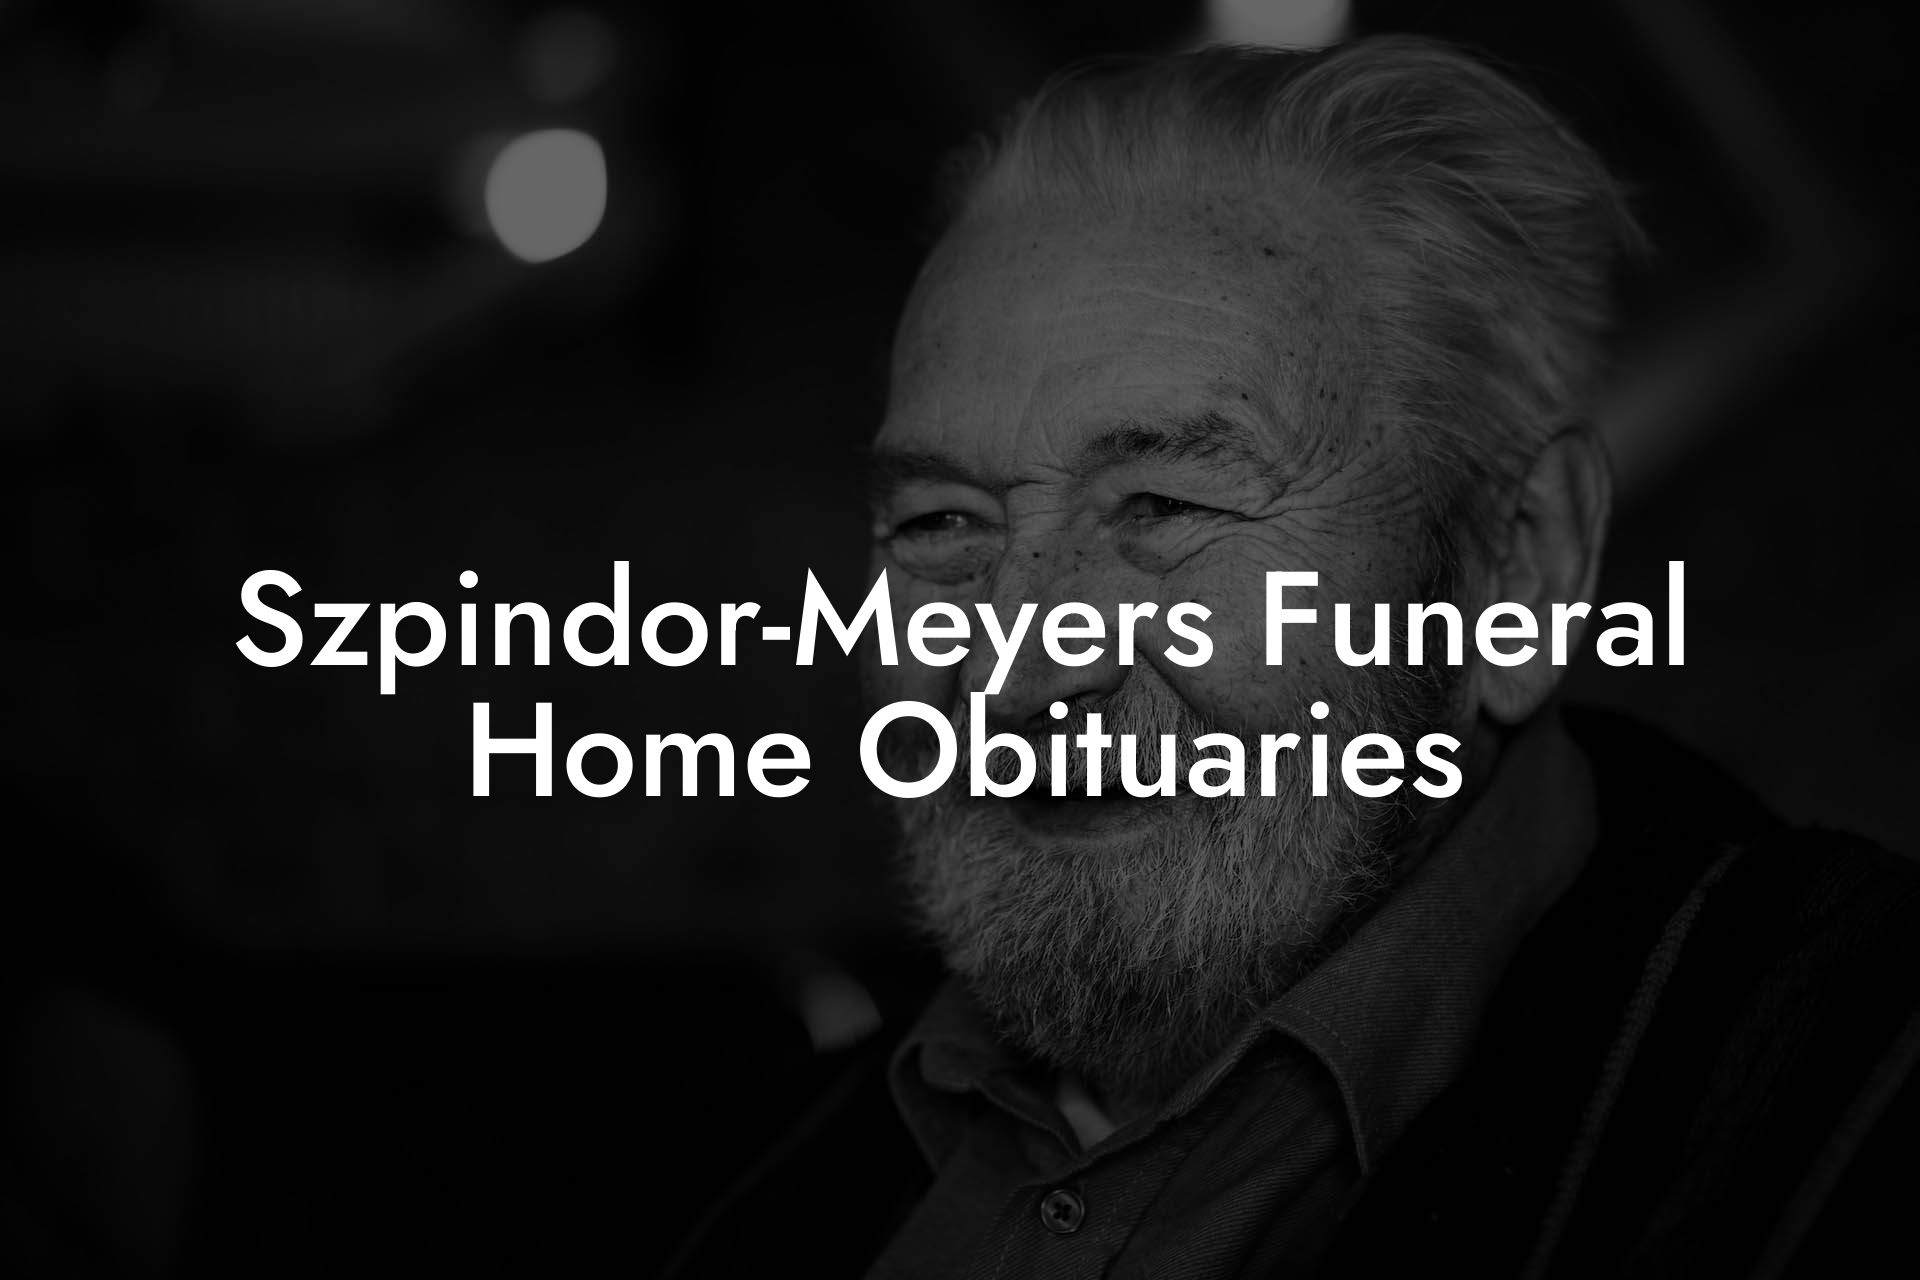 Szpindor-Meyers Funeral Home Obituaries